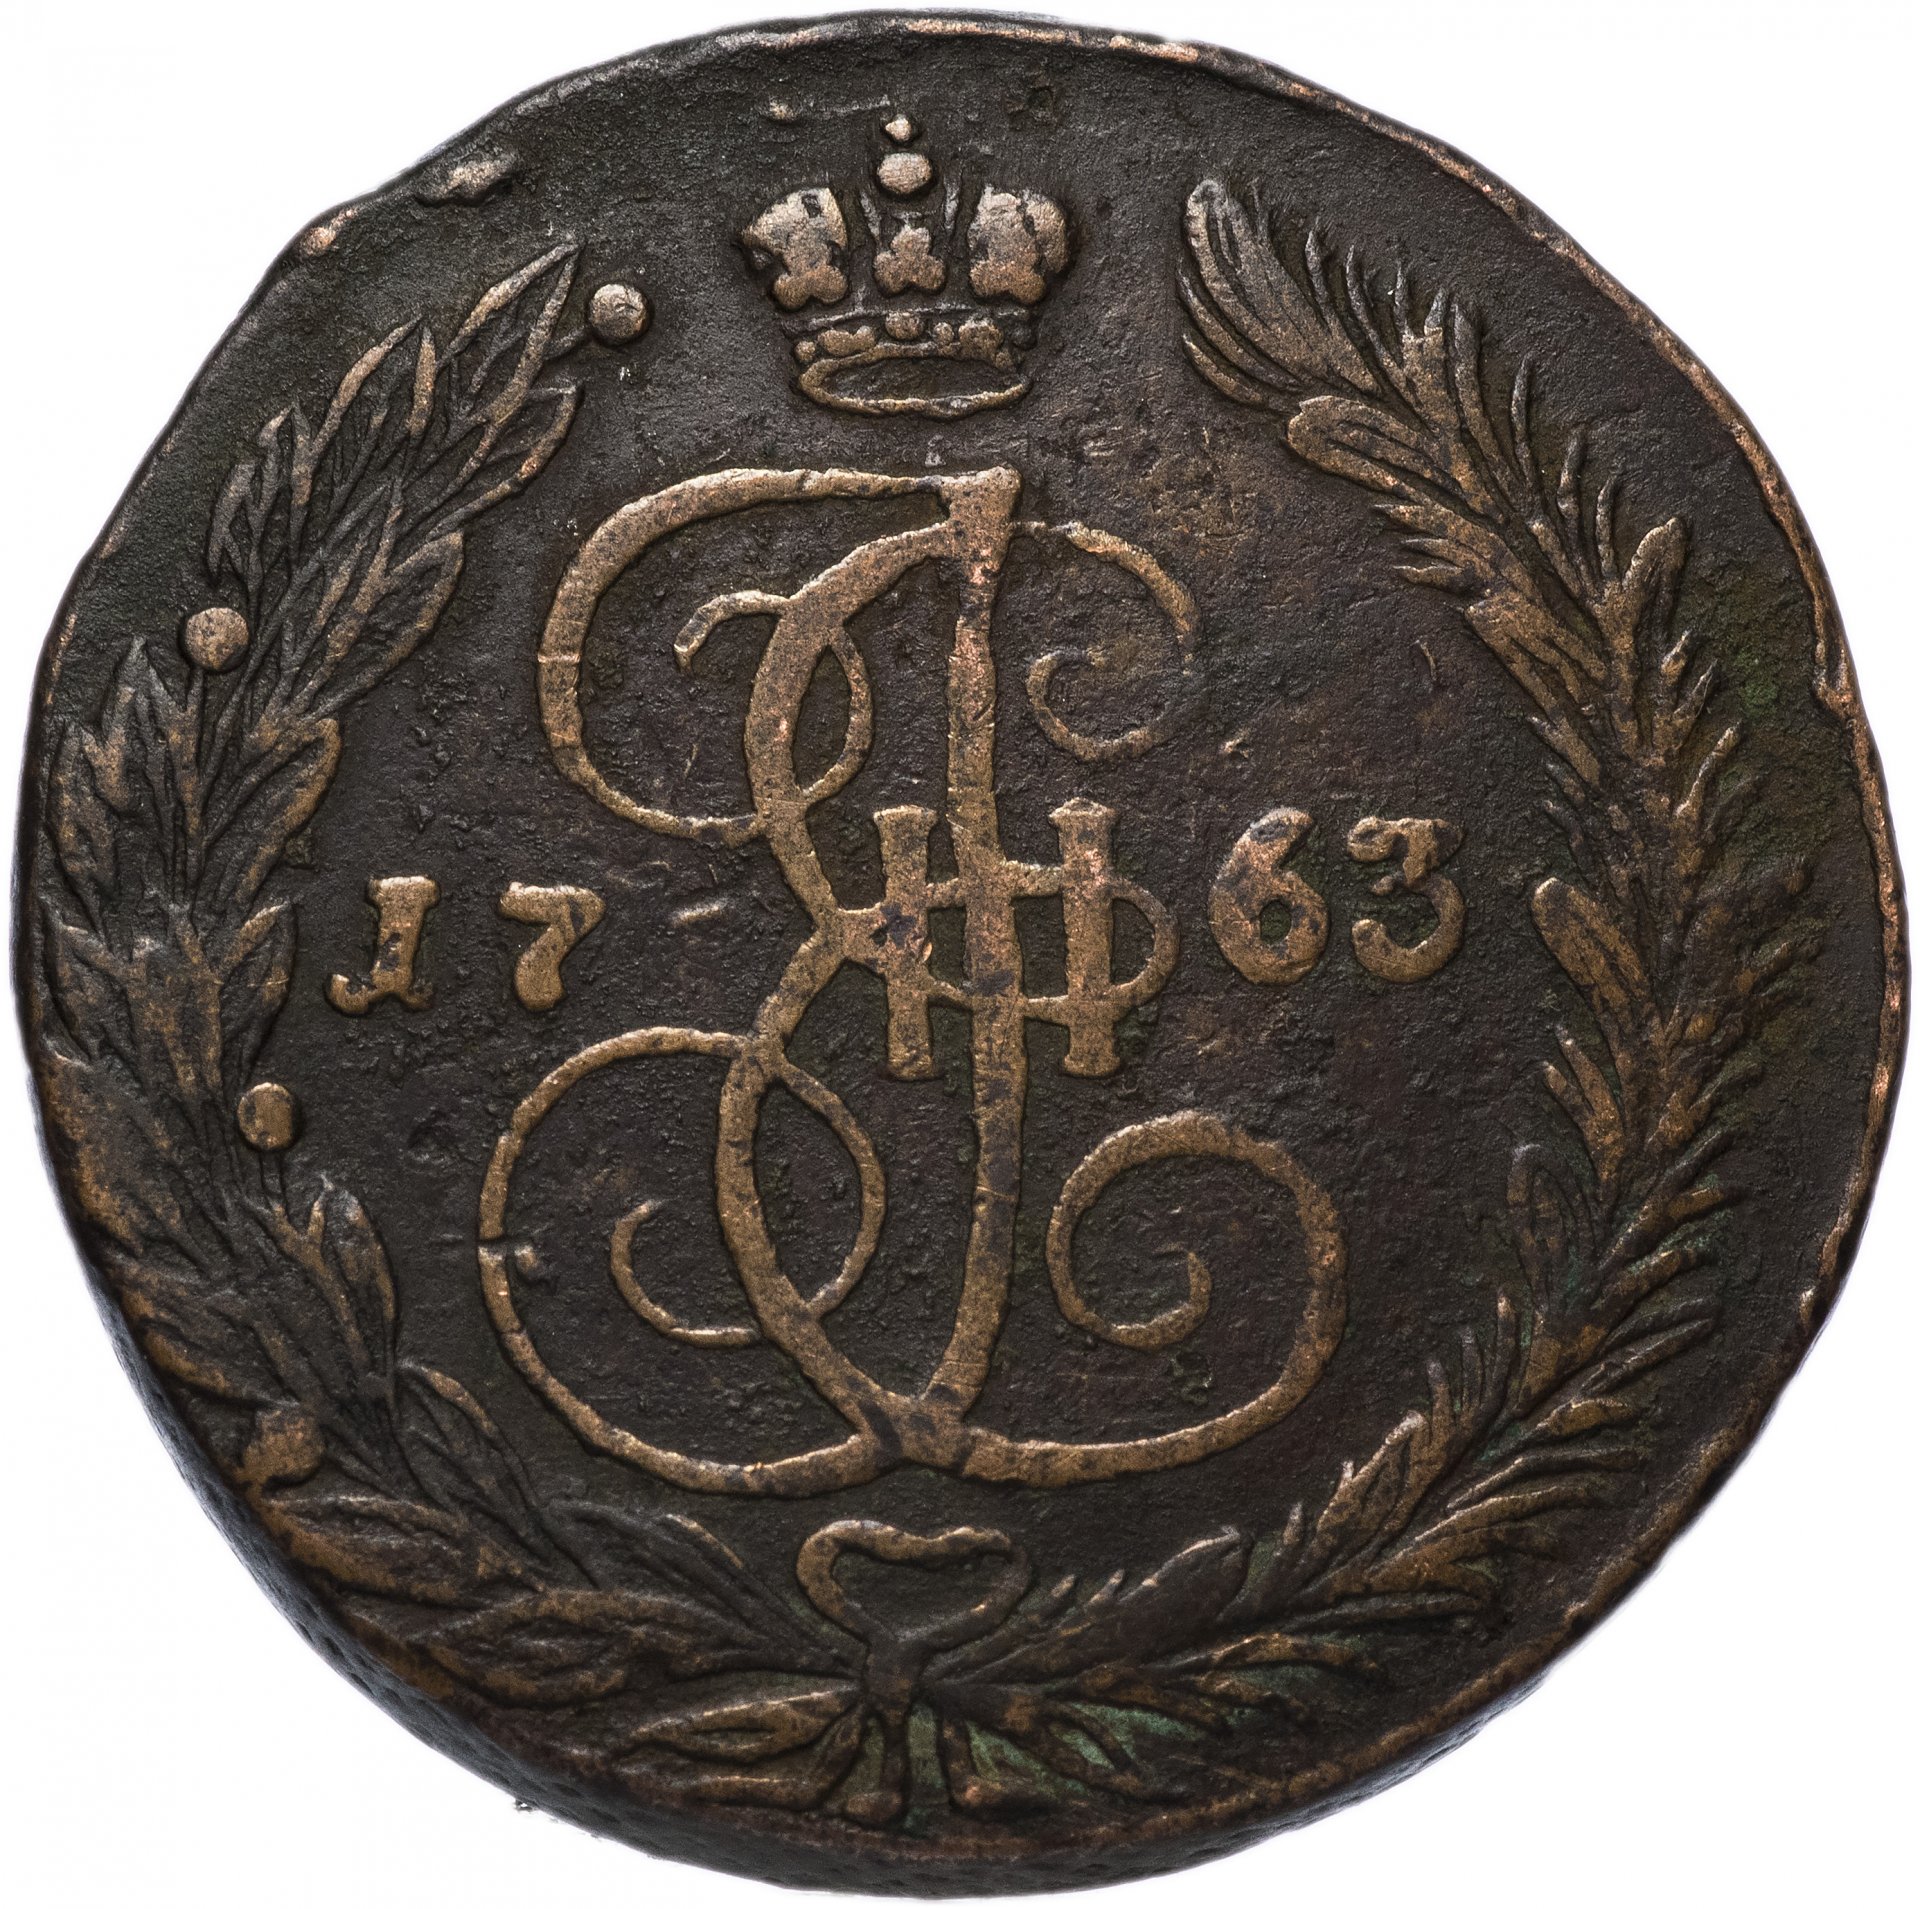 Пять копеек 1763. Монета 1763 года 5 копеек е м. 5 копеек 1763